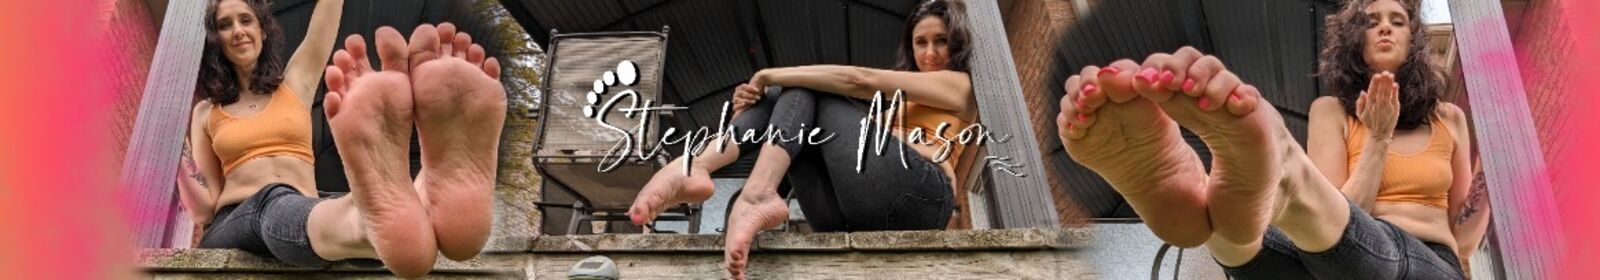 See Madame Stephanie Mason's feet playground profile